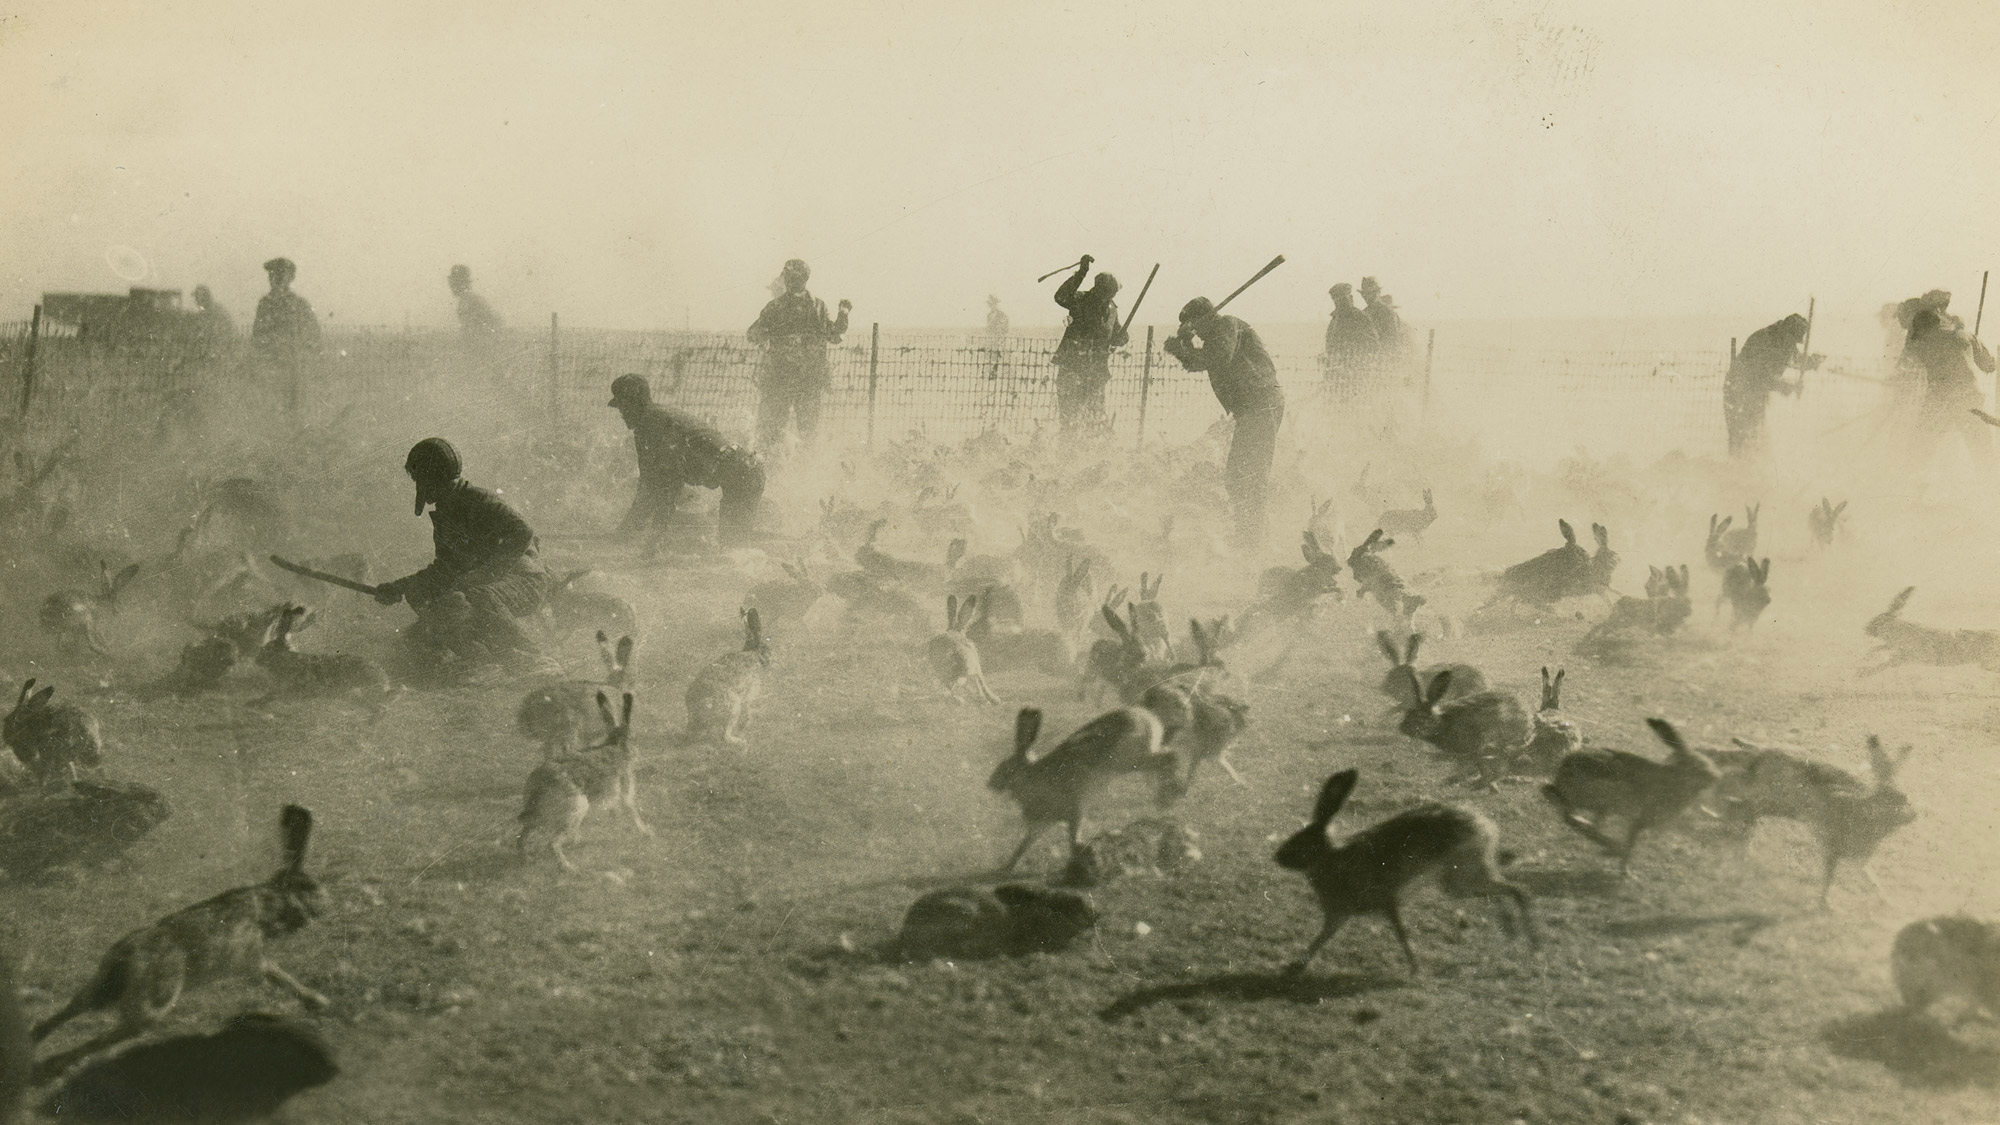 Kansanans culling jackrabbits during a Dust Bowl rabbit drive.